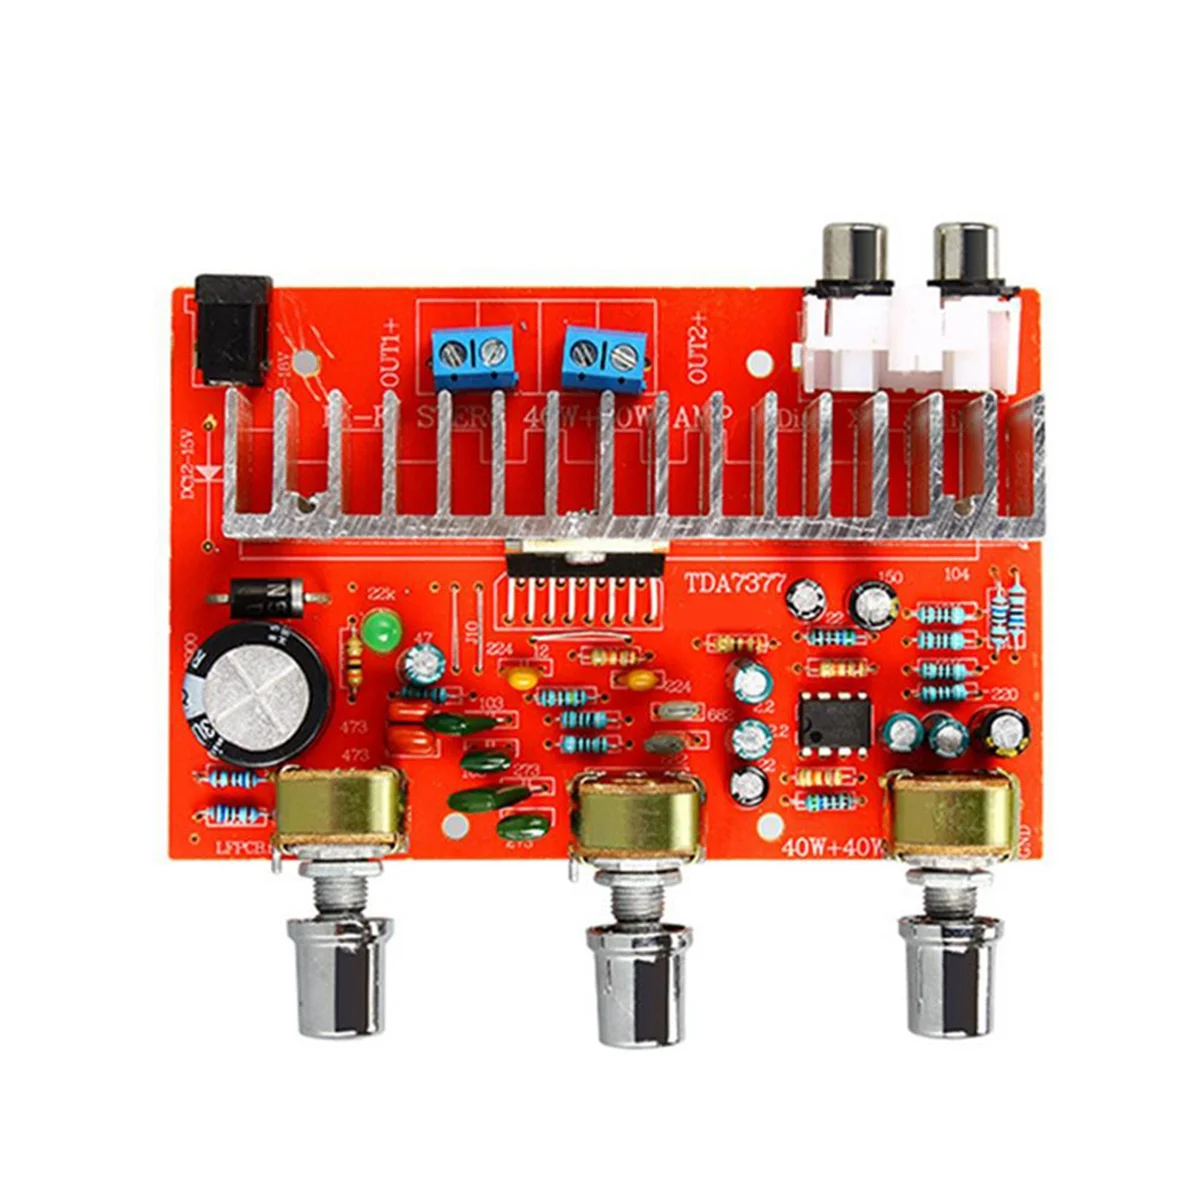 

TDA7377 Digital Audio Amplifier Board 40W+40W Stereo 2.0 Channel Power Amplificador for Car DIY Speaker DC12V E5-005